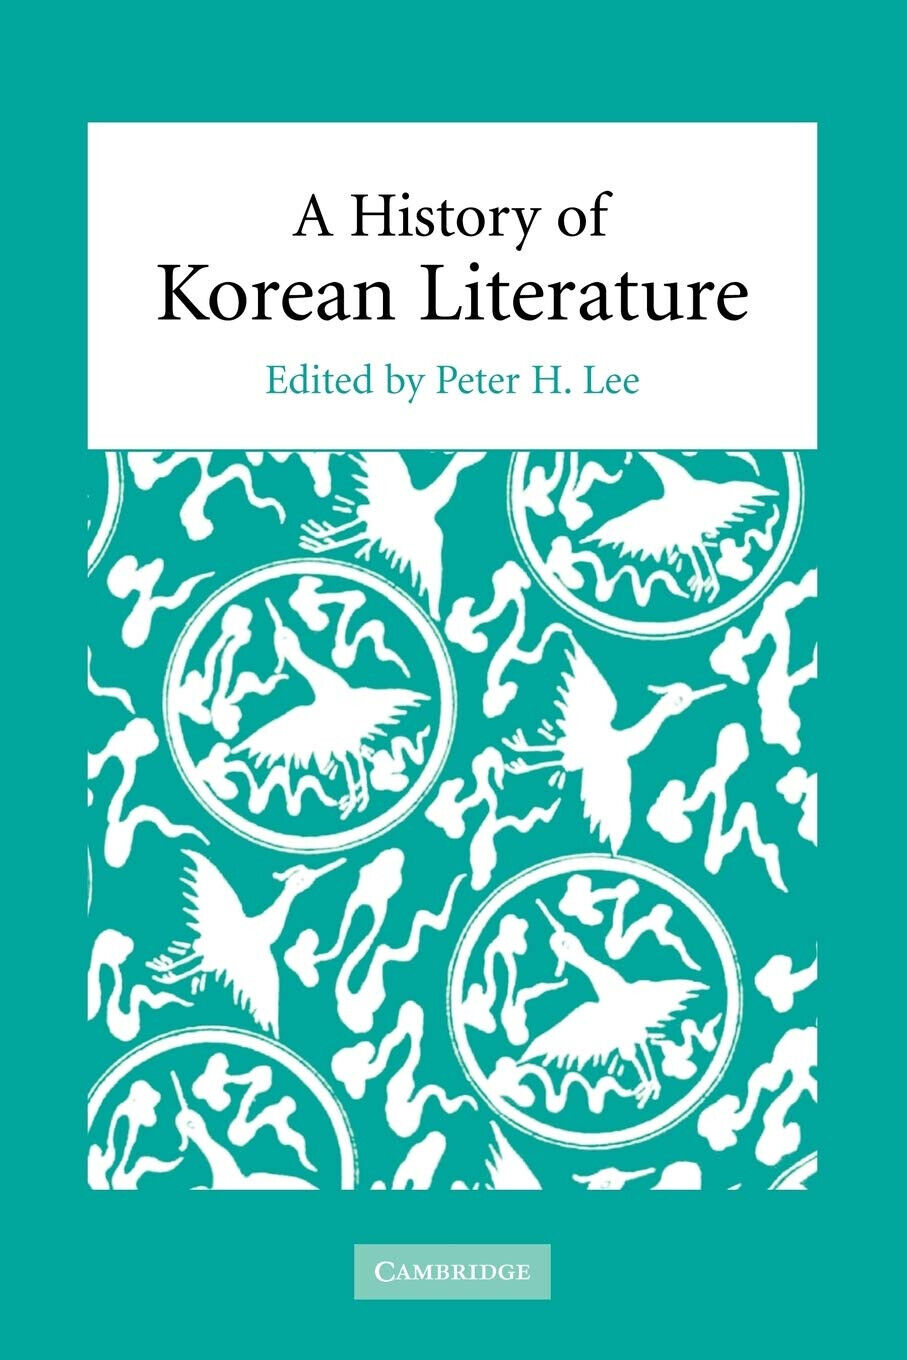 A History of Korean Literature - Peter H. Lee - Cambridge, 2009